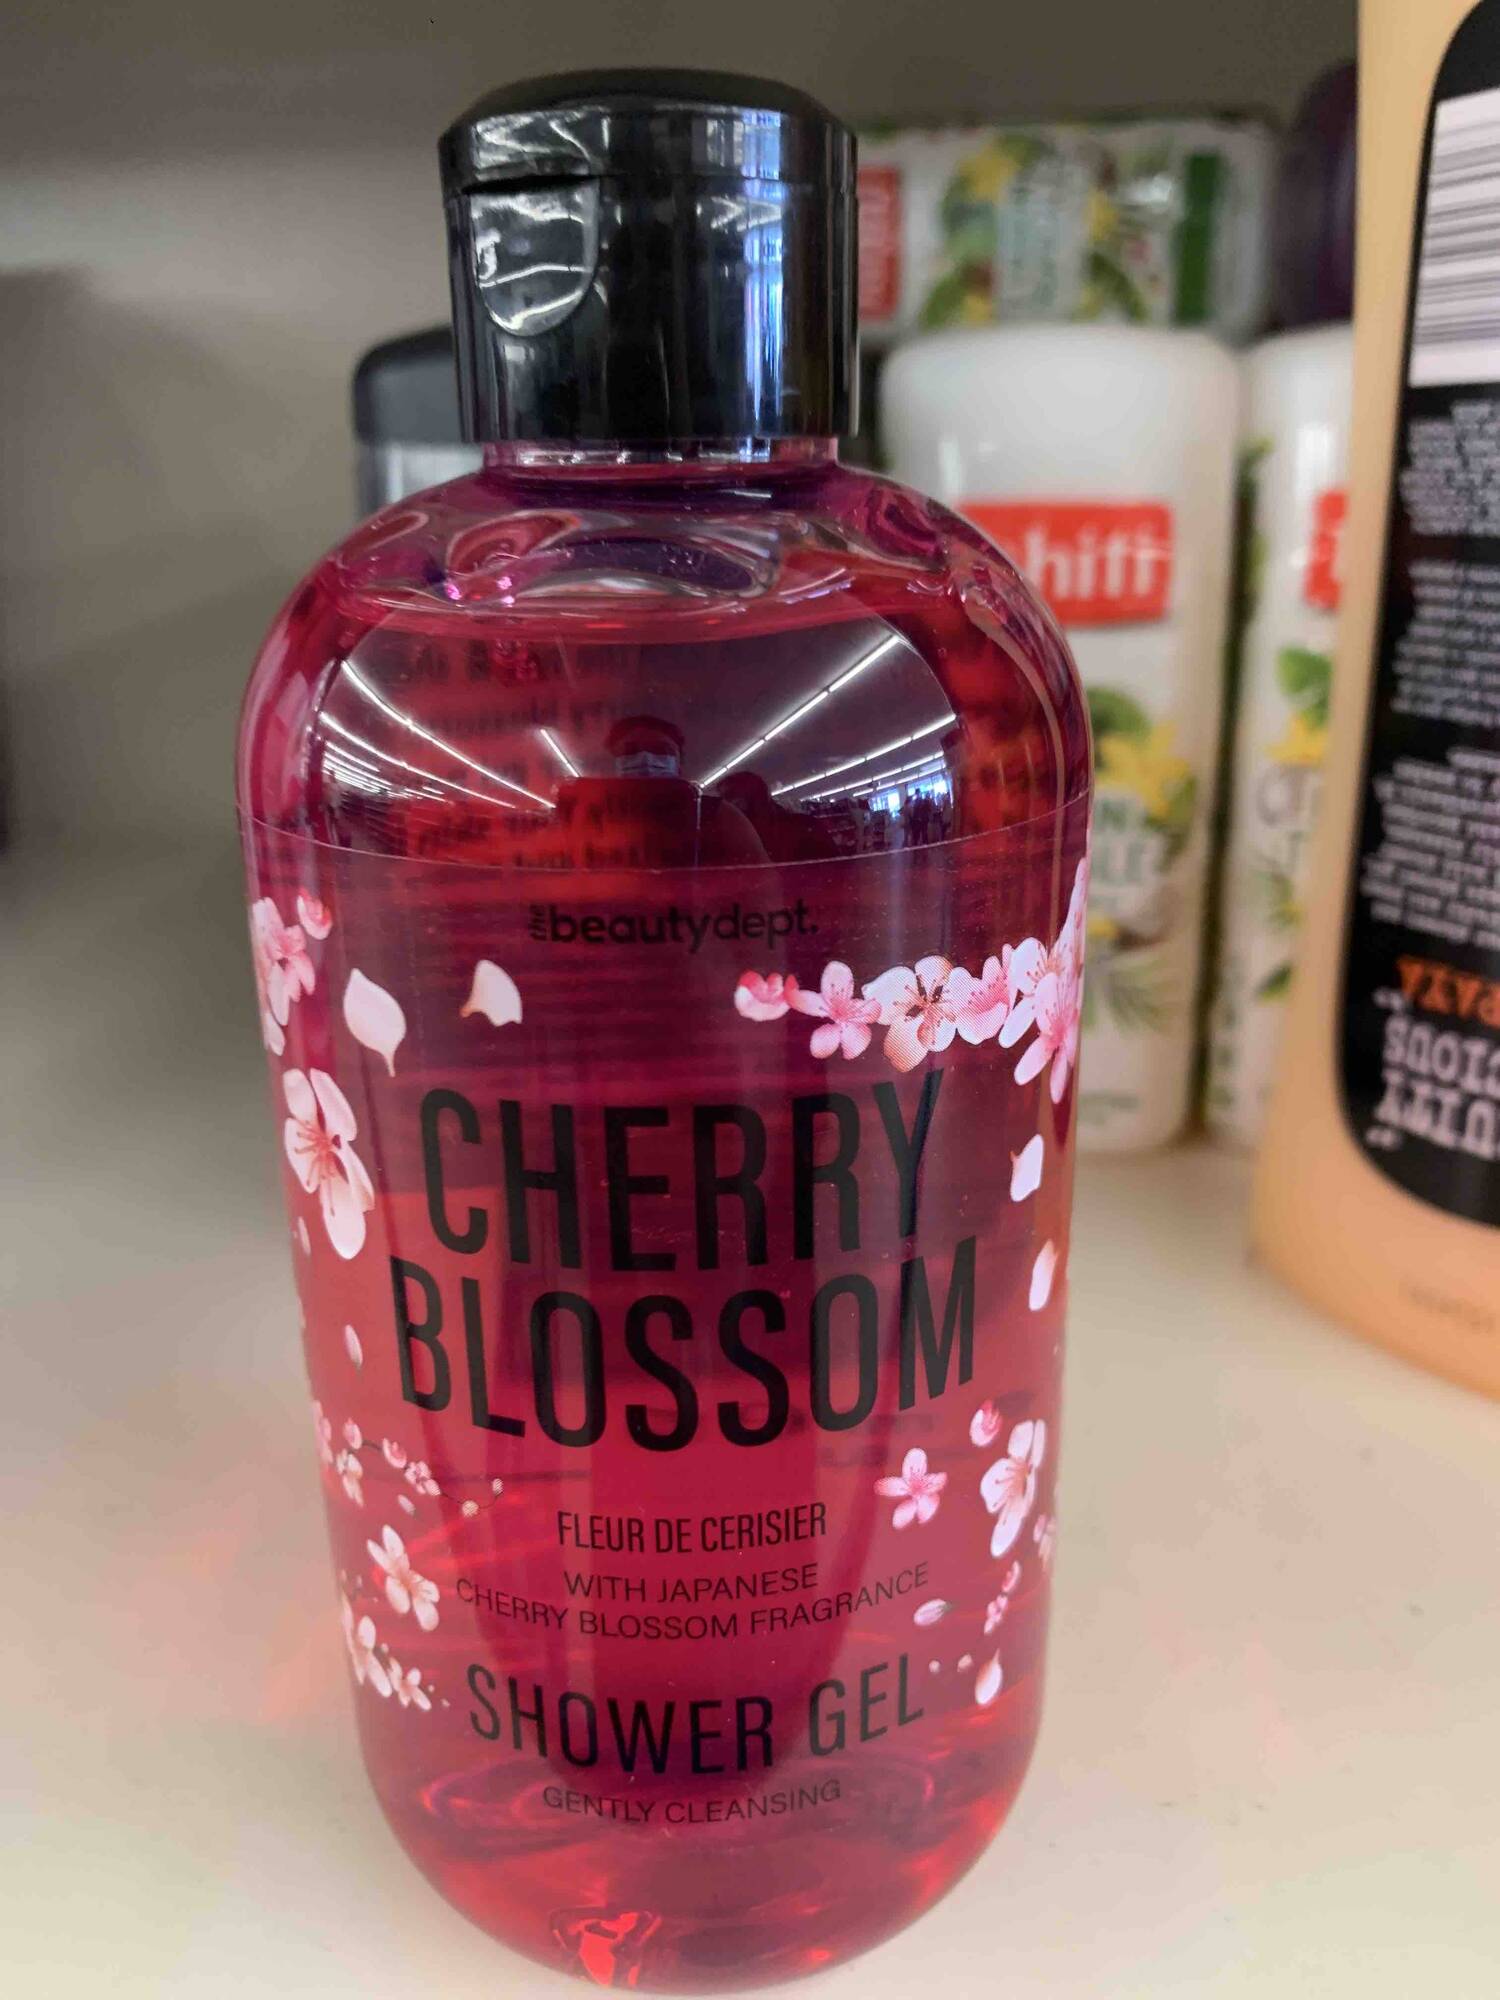 THE BEAUTY DEPT - Cherry blossom - Shower gel